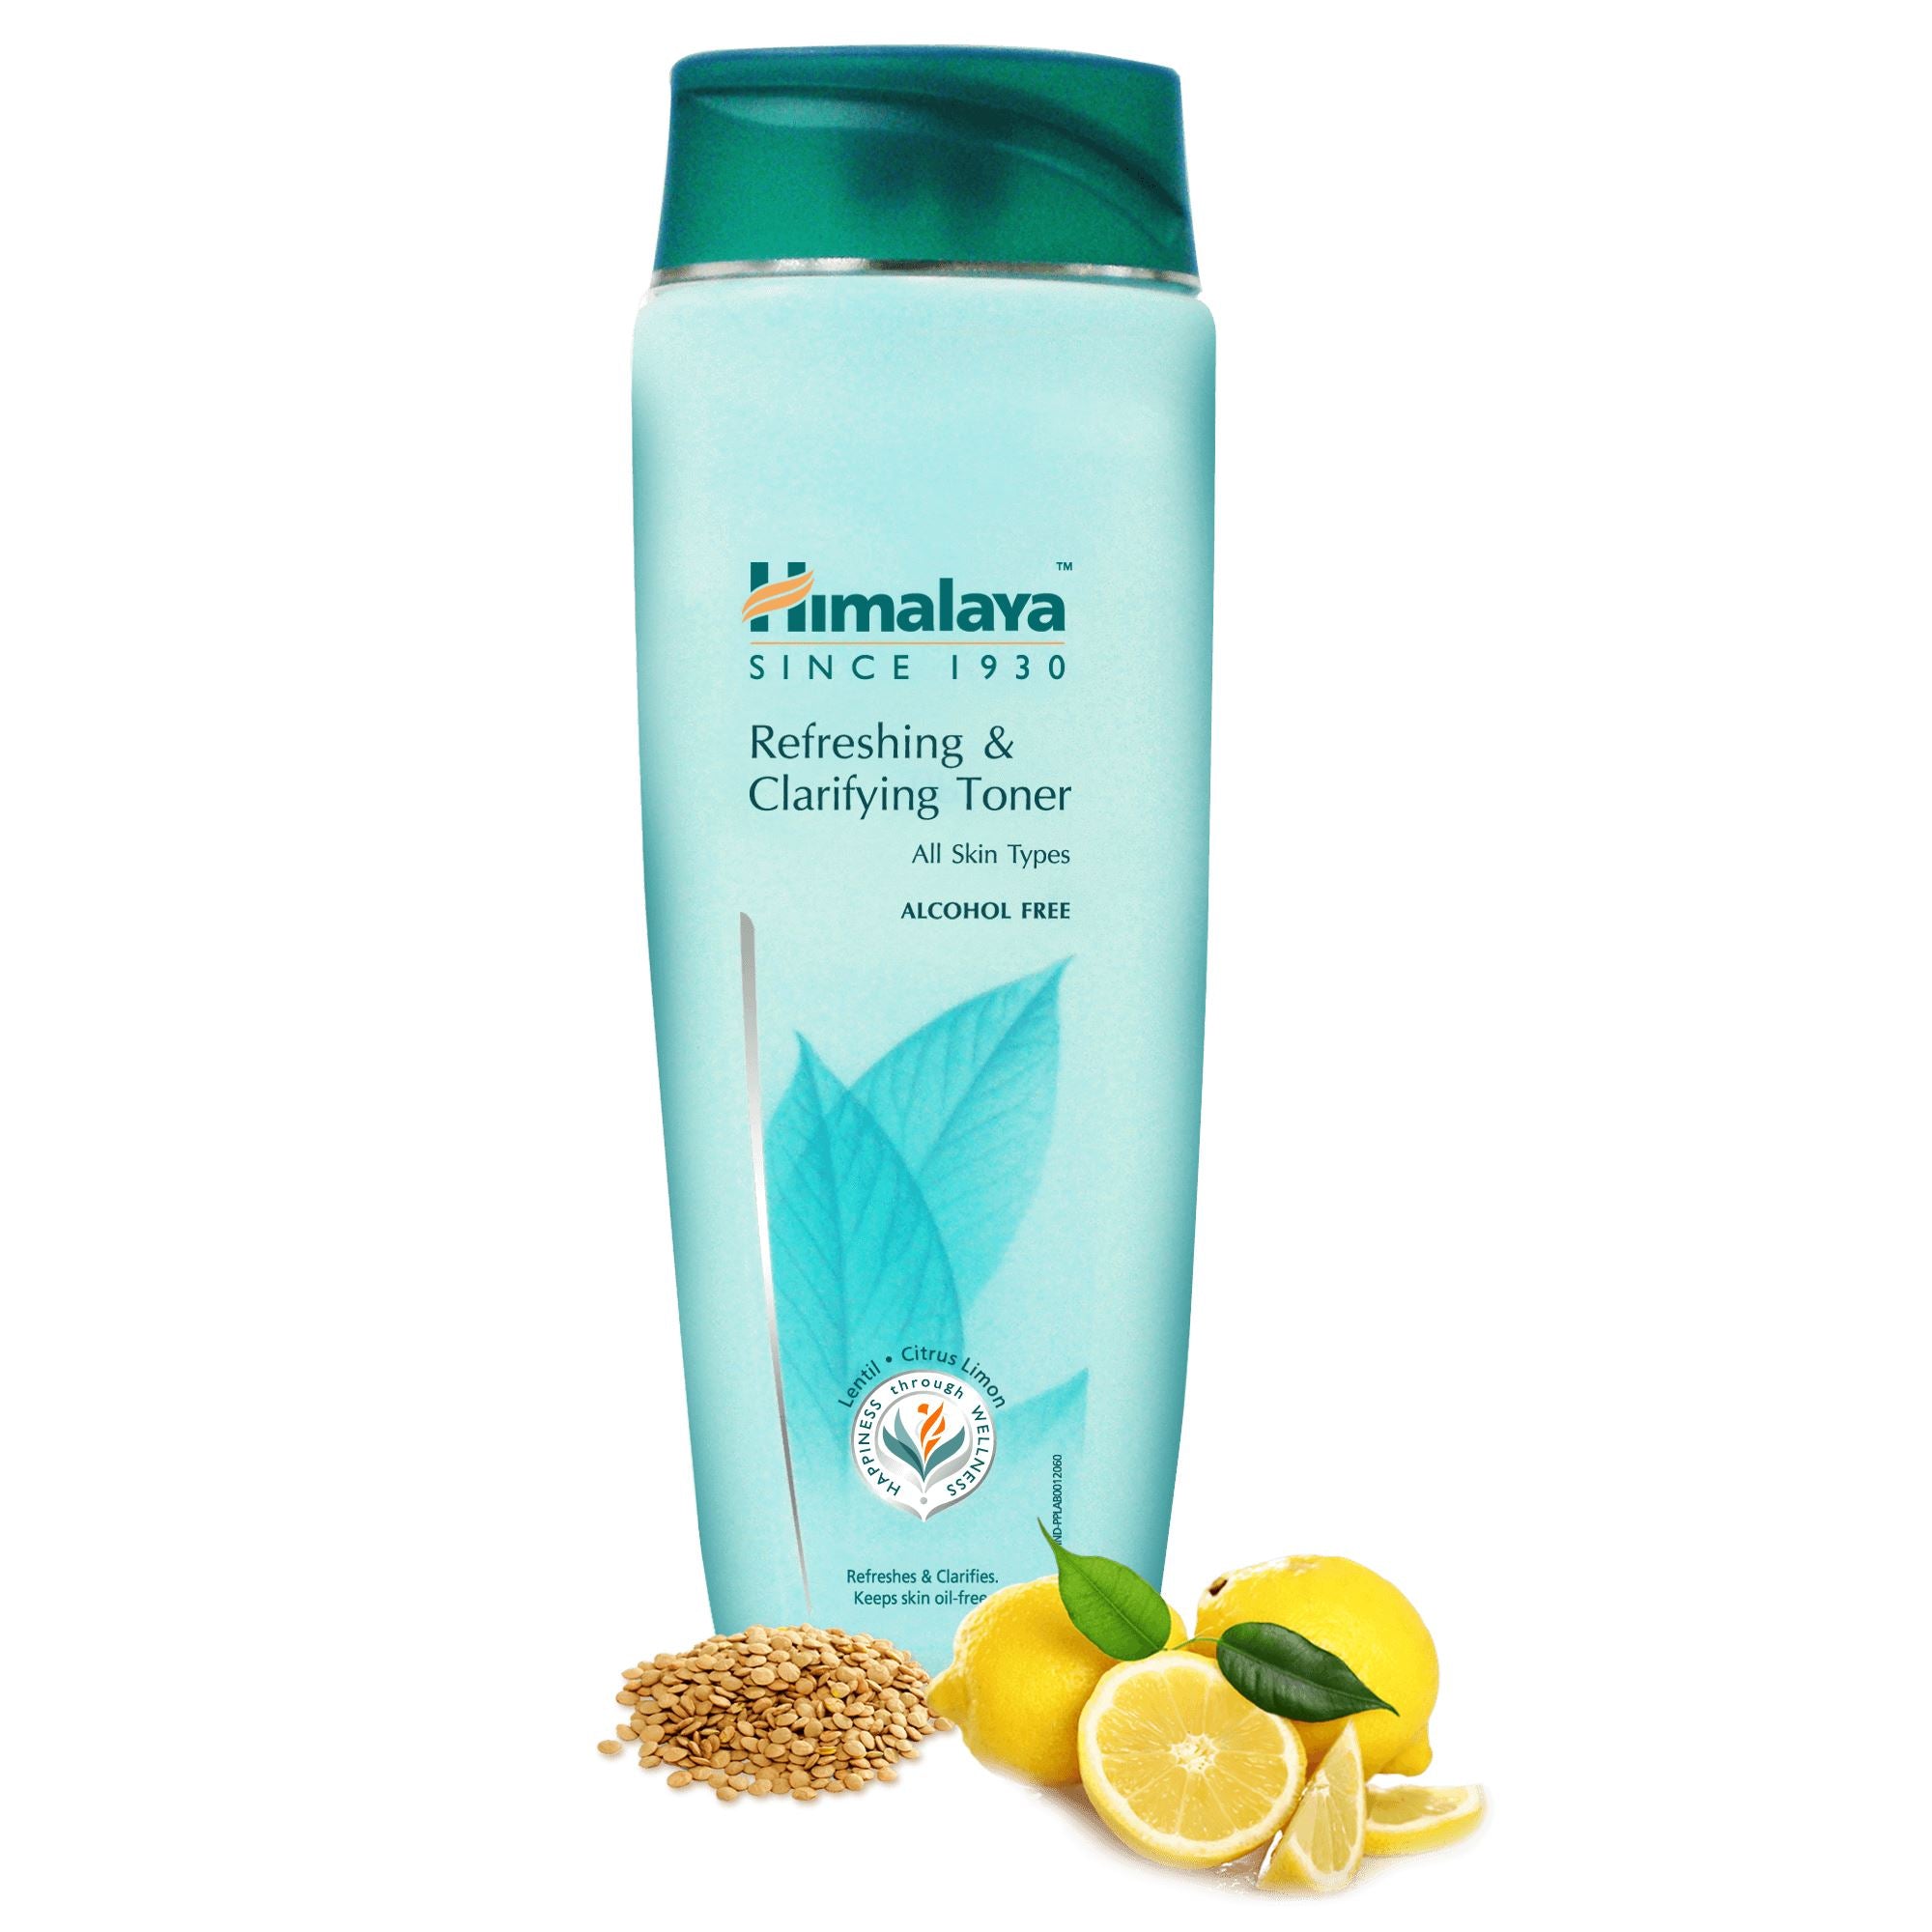 Himalaya Refreshing & Clarifying Toner - Refreshes & clarifies. Keeps skin oil-free